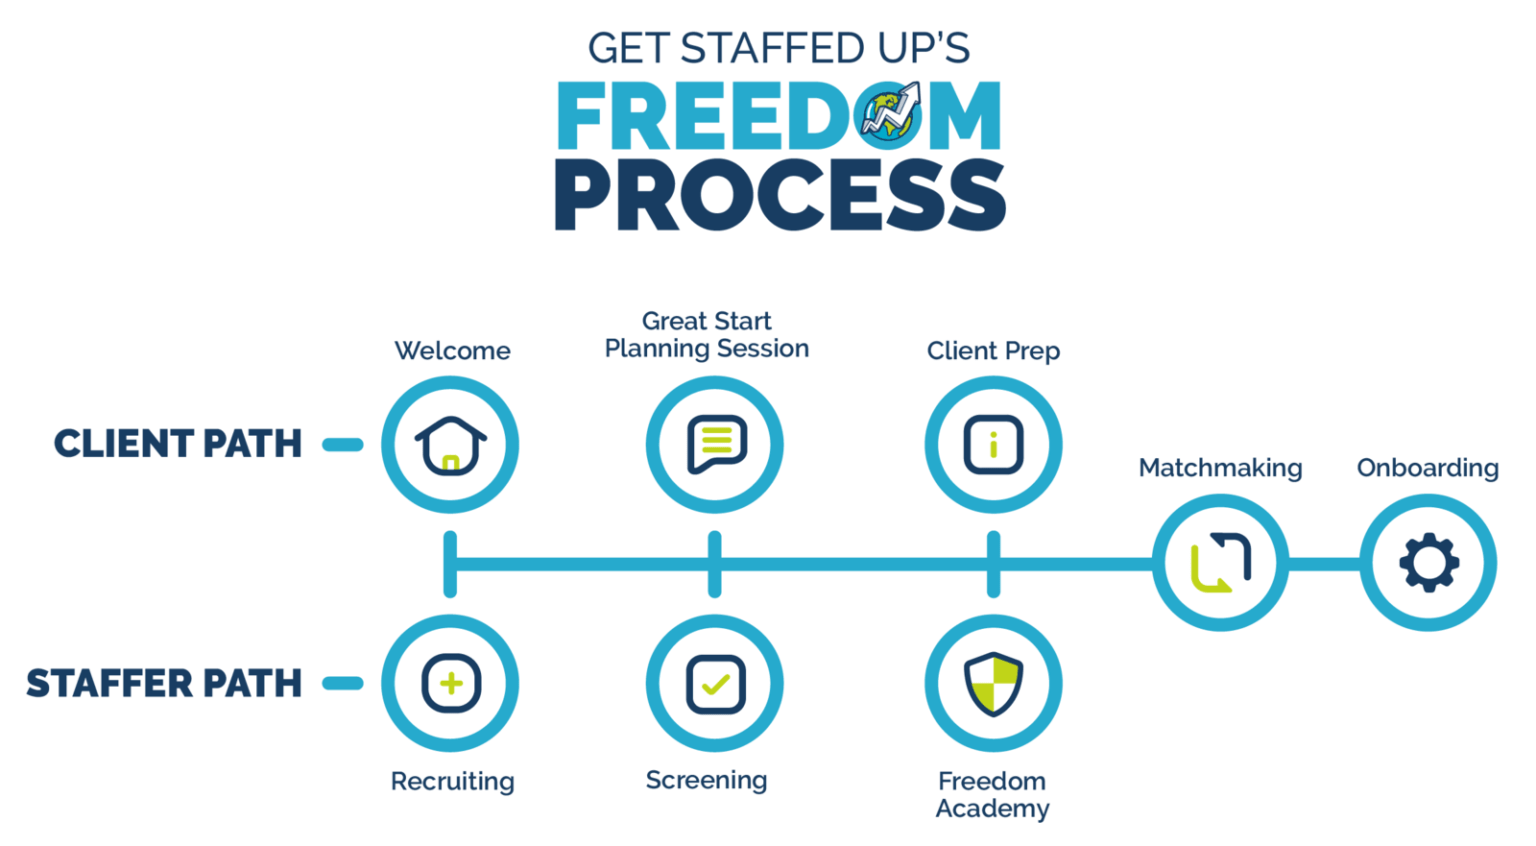 Get Staffed Up's Freedom Process